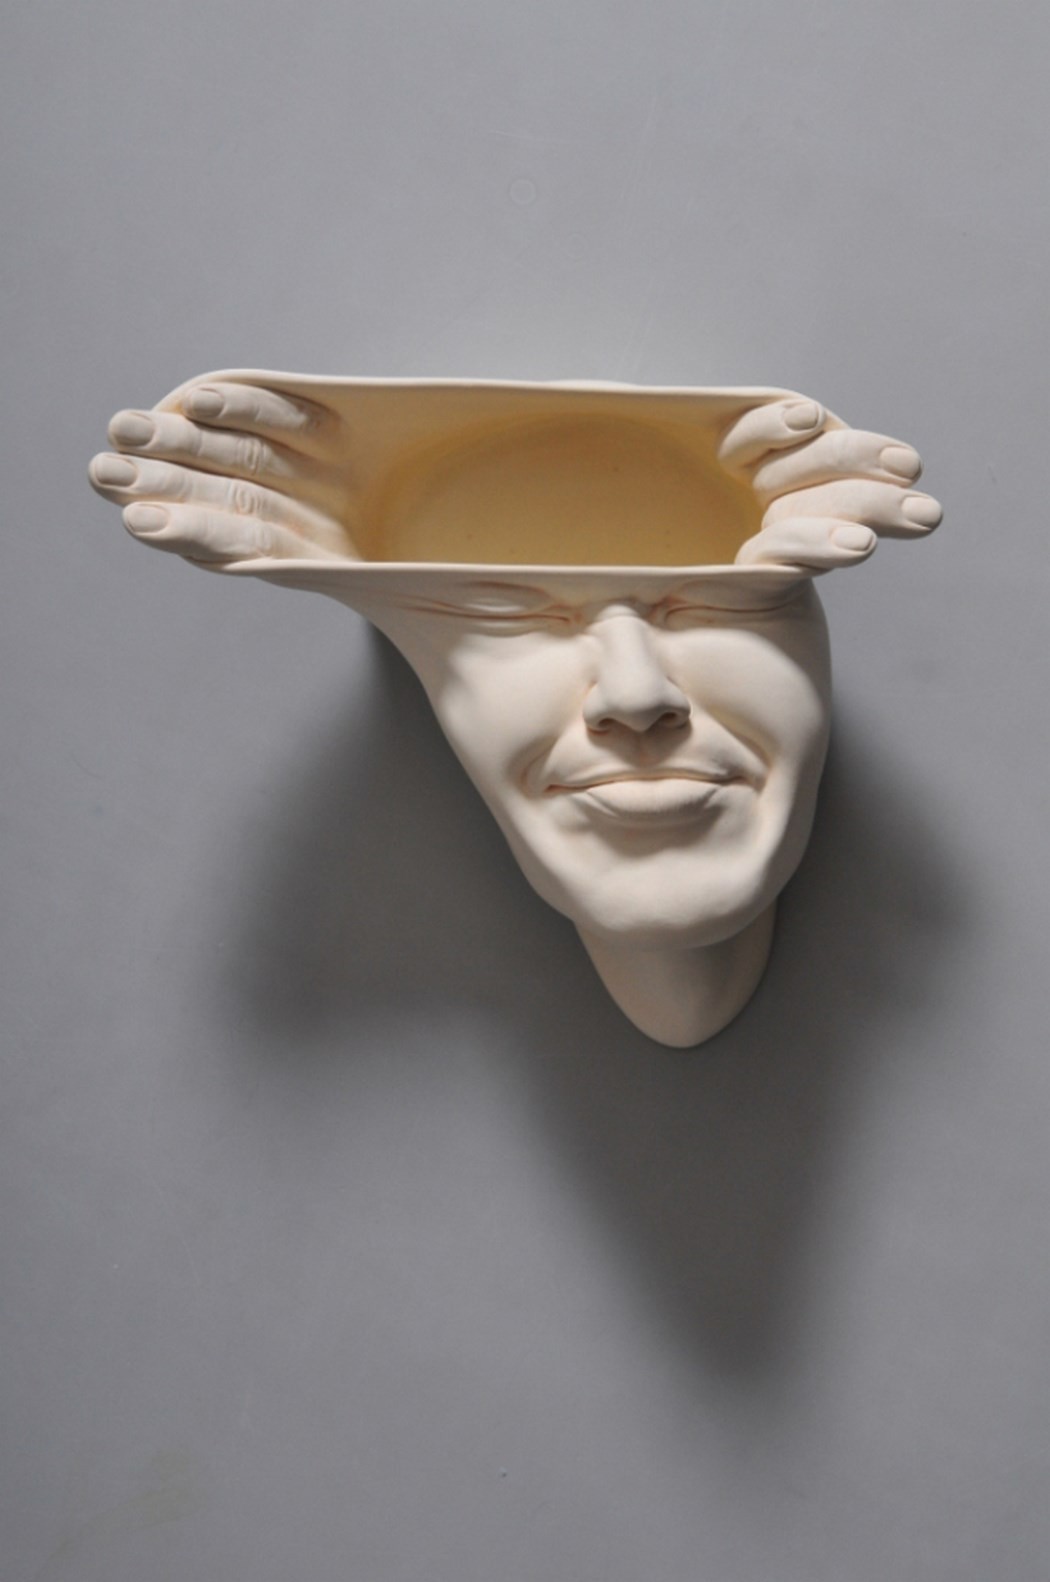 6 ceramic sculpture byjohnson tsang